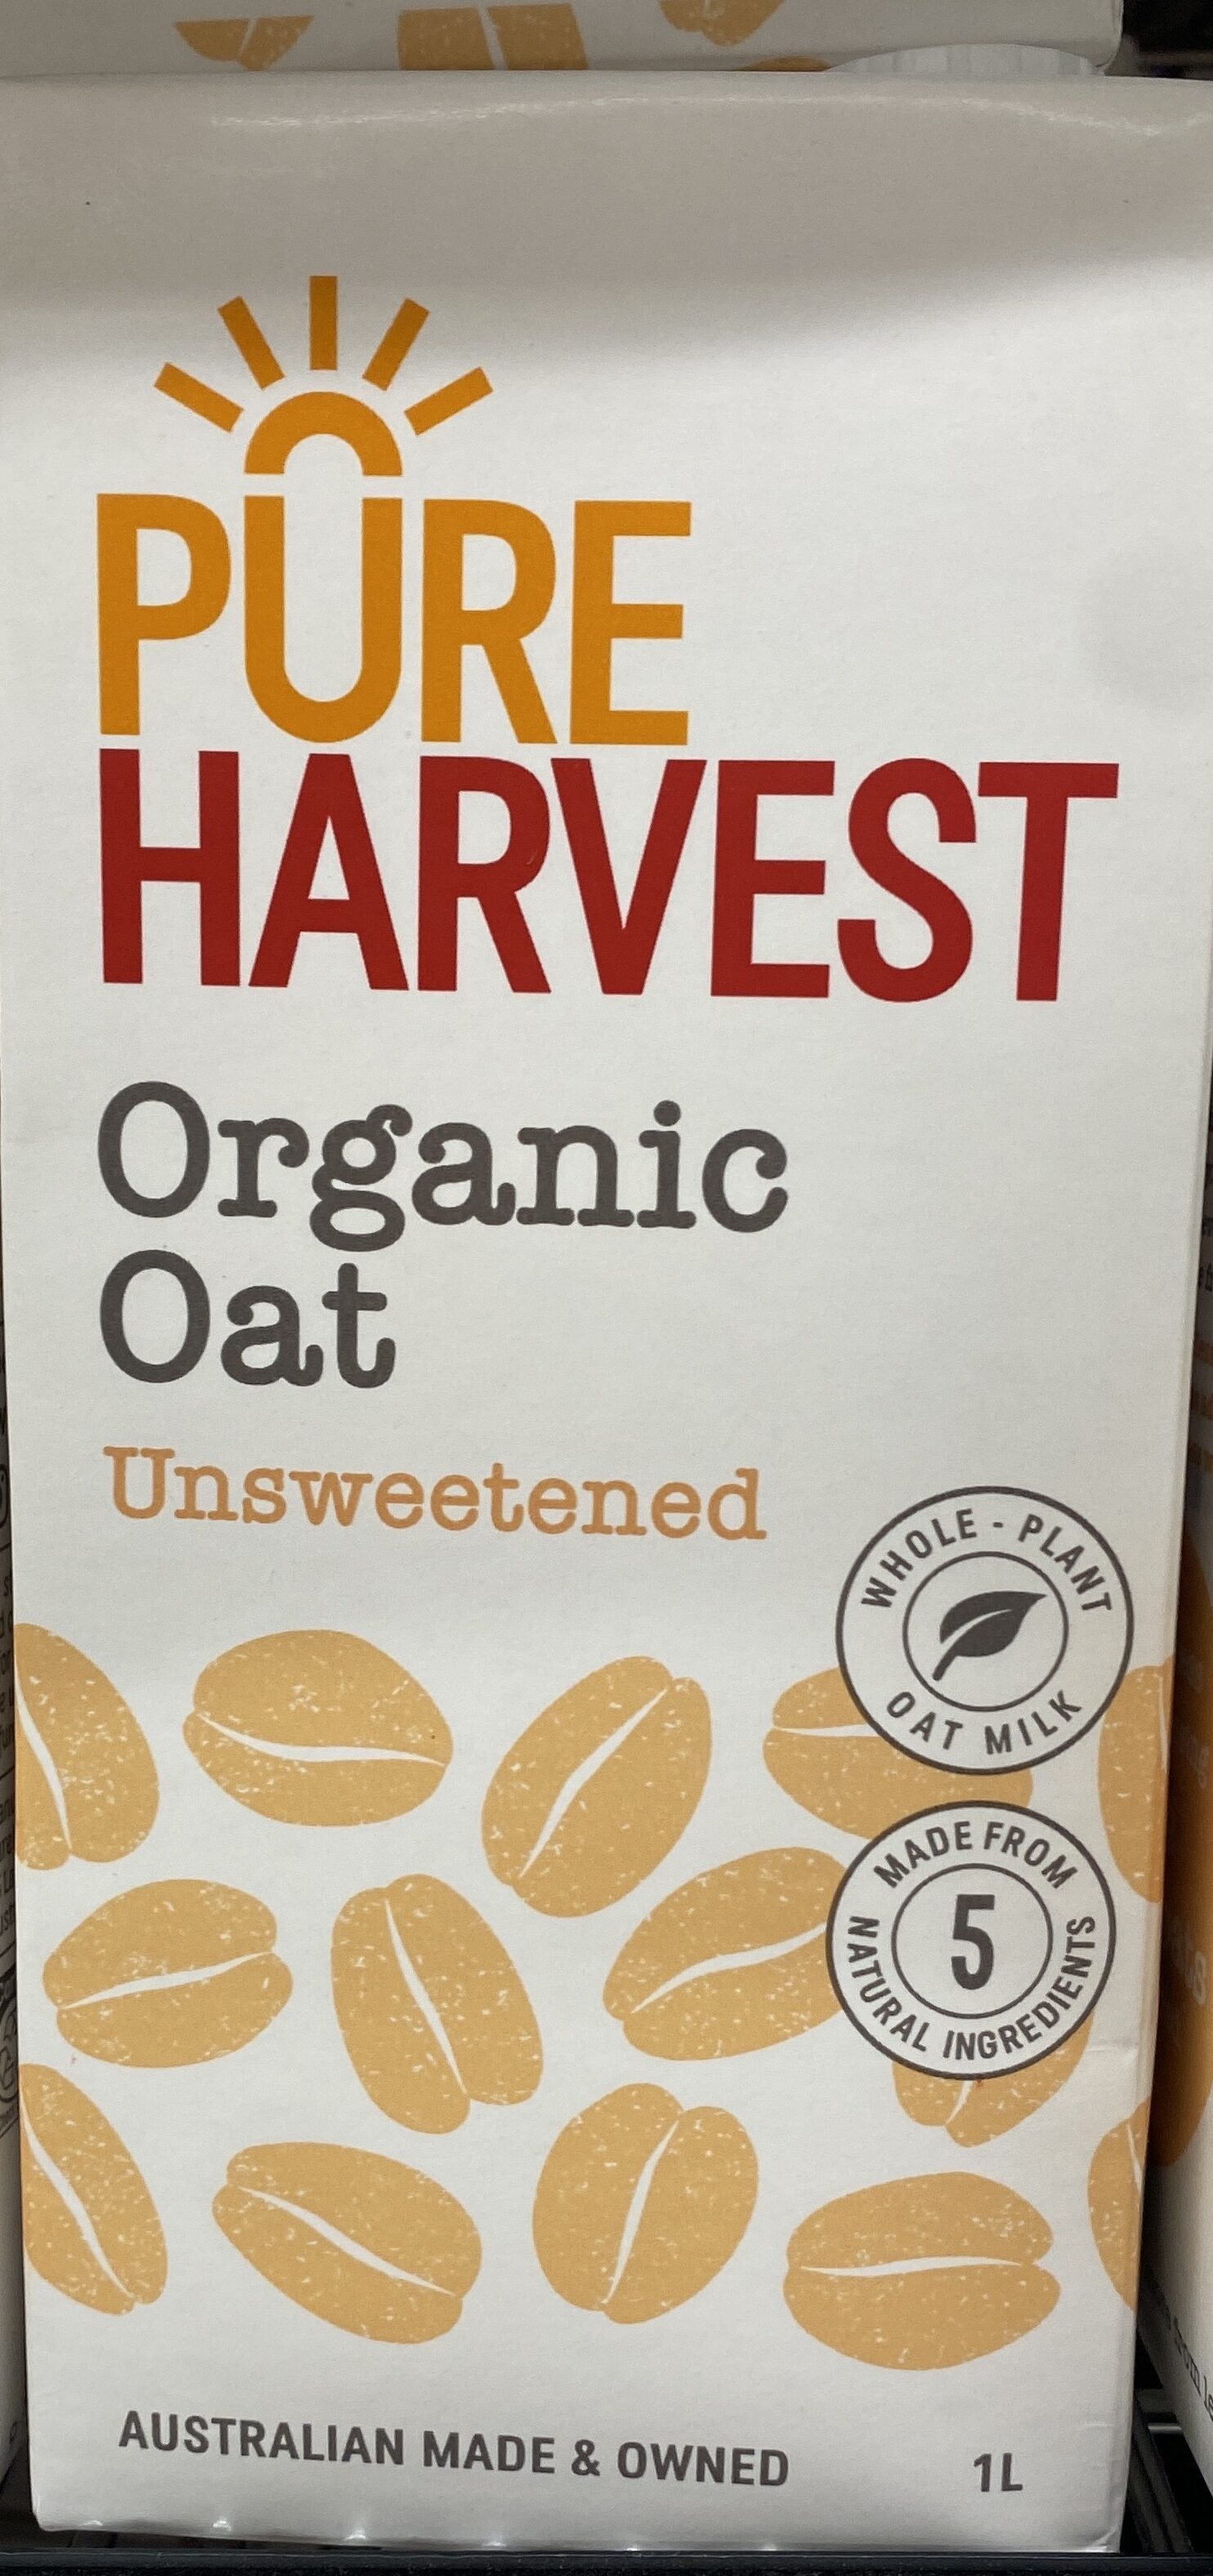 Oat Milk it's Organic Unsweetened Original - Product